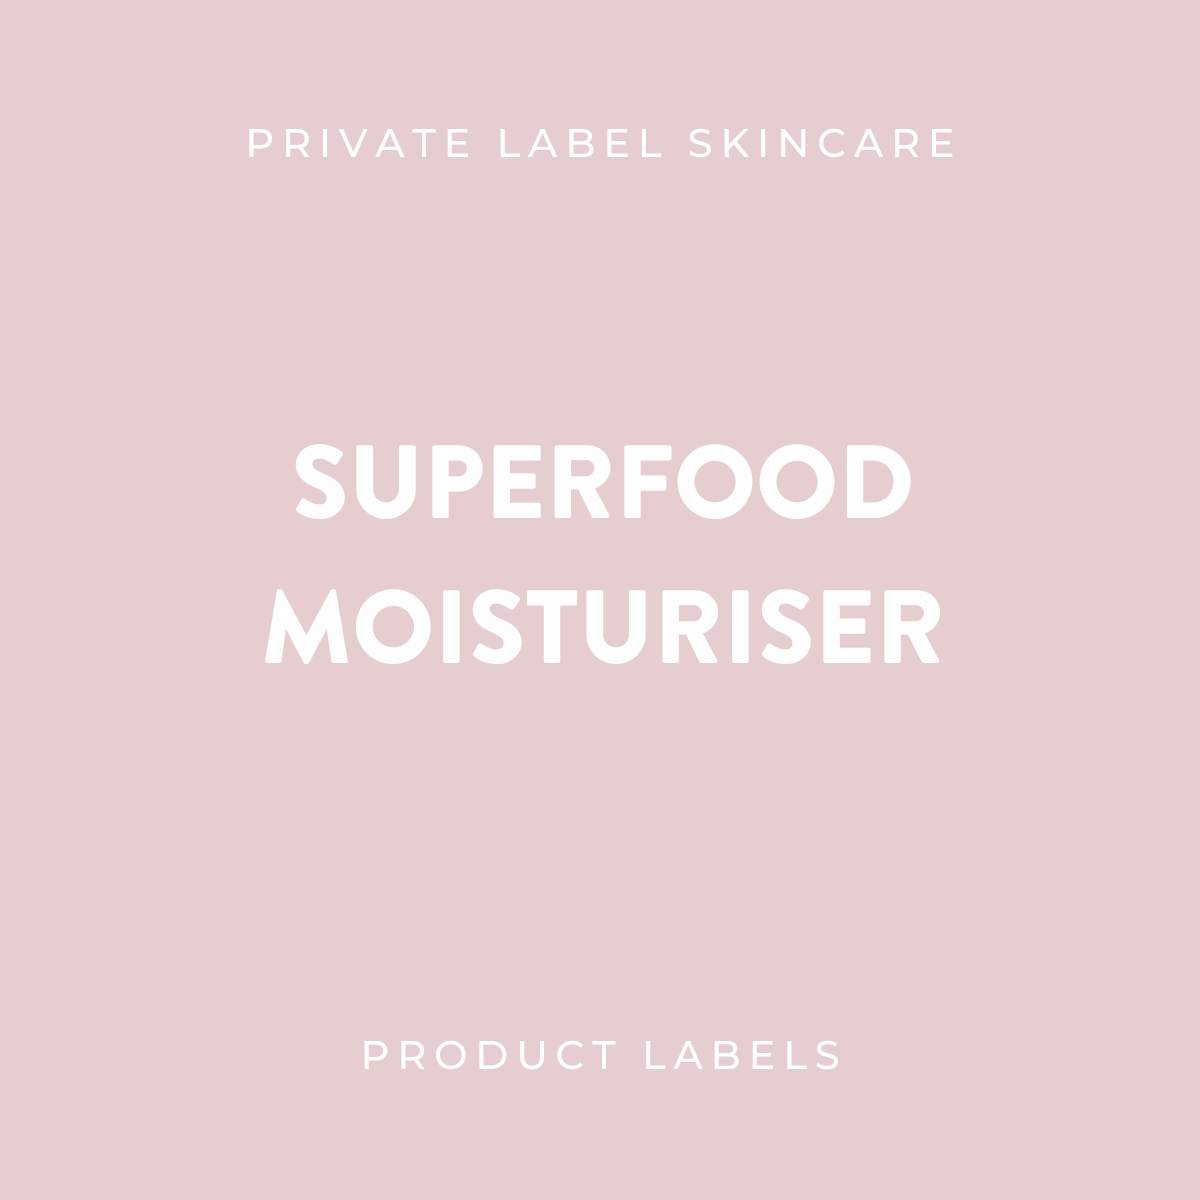 Superfood Moisturiser Product Labels (x 20 labels)